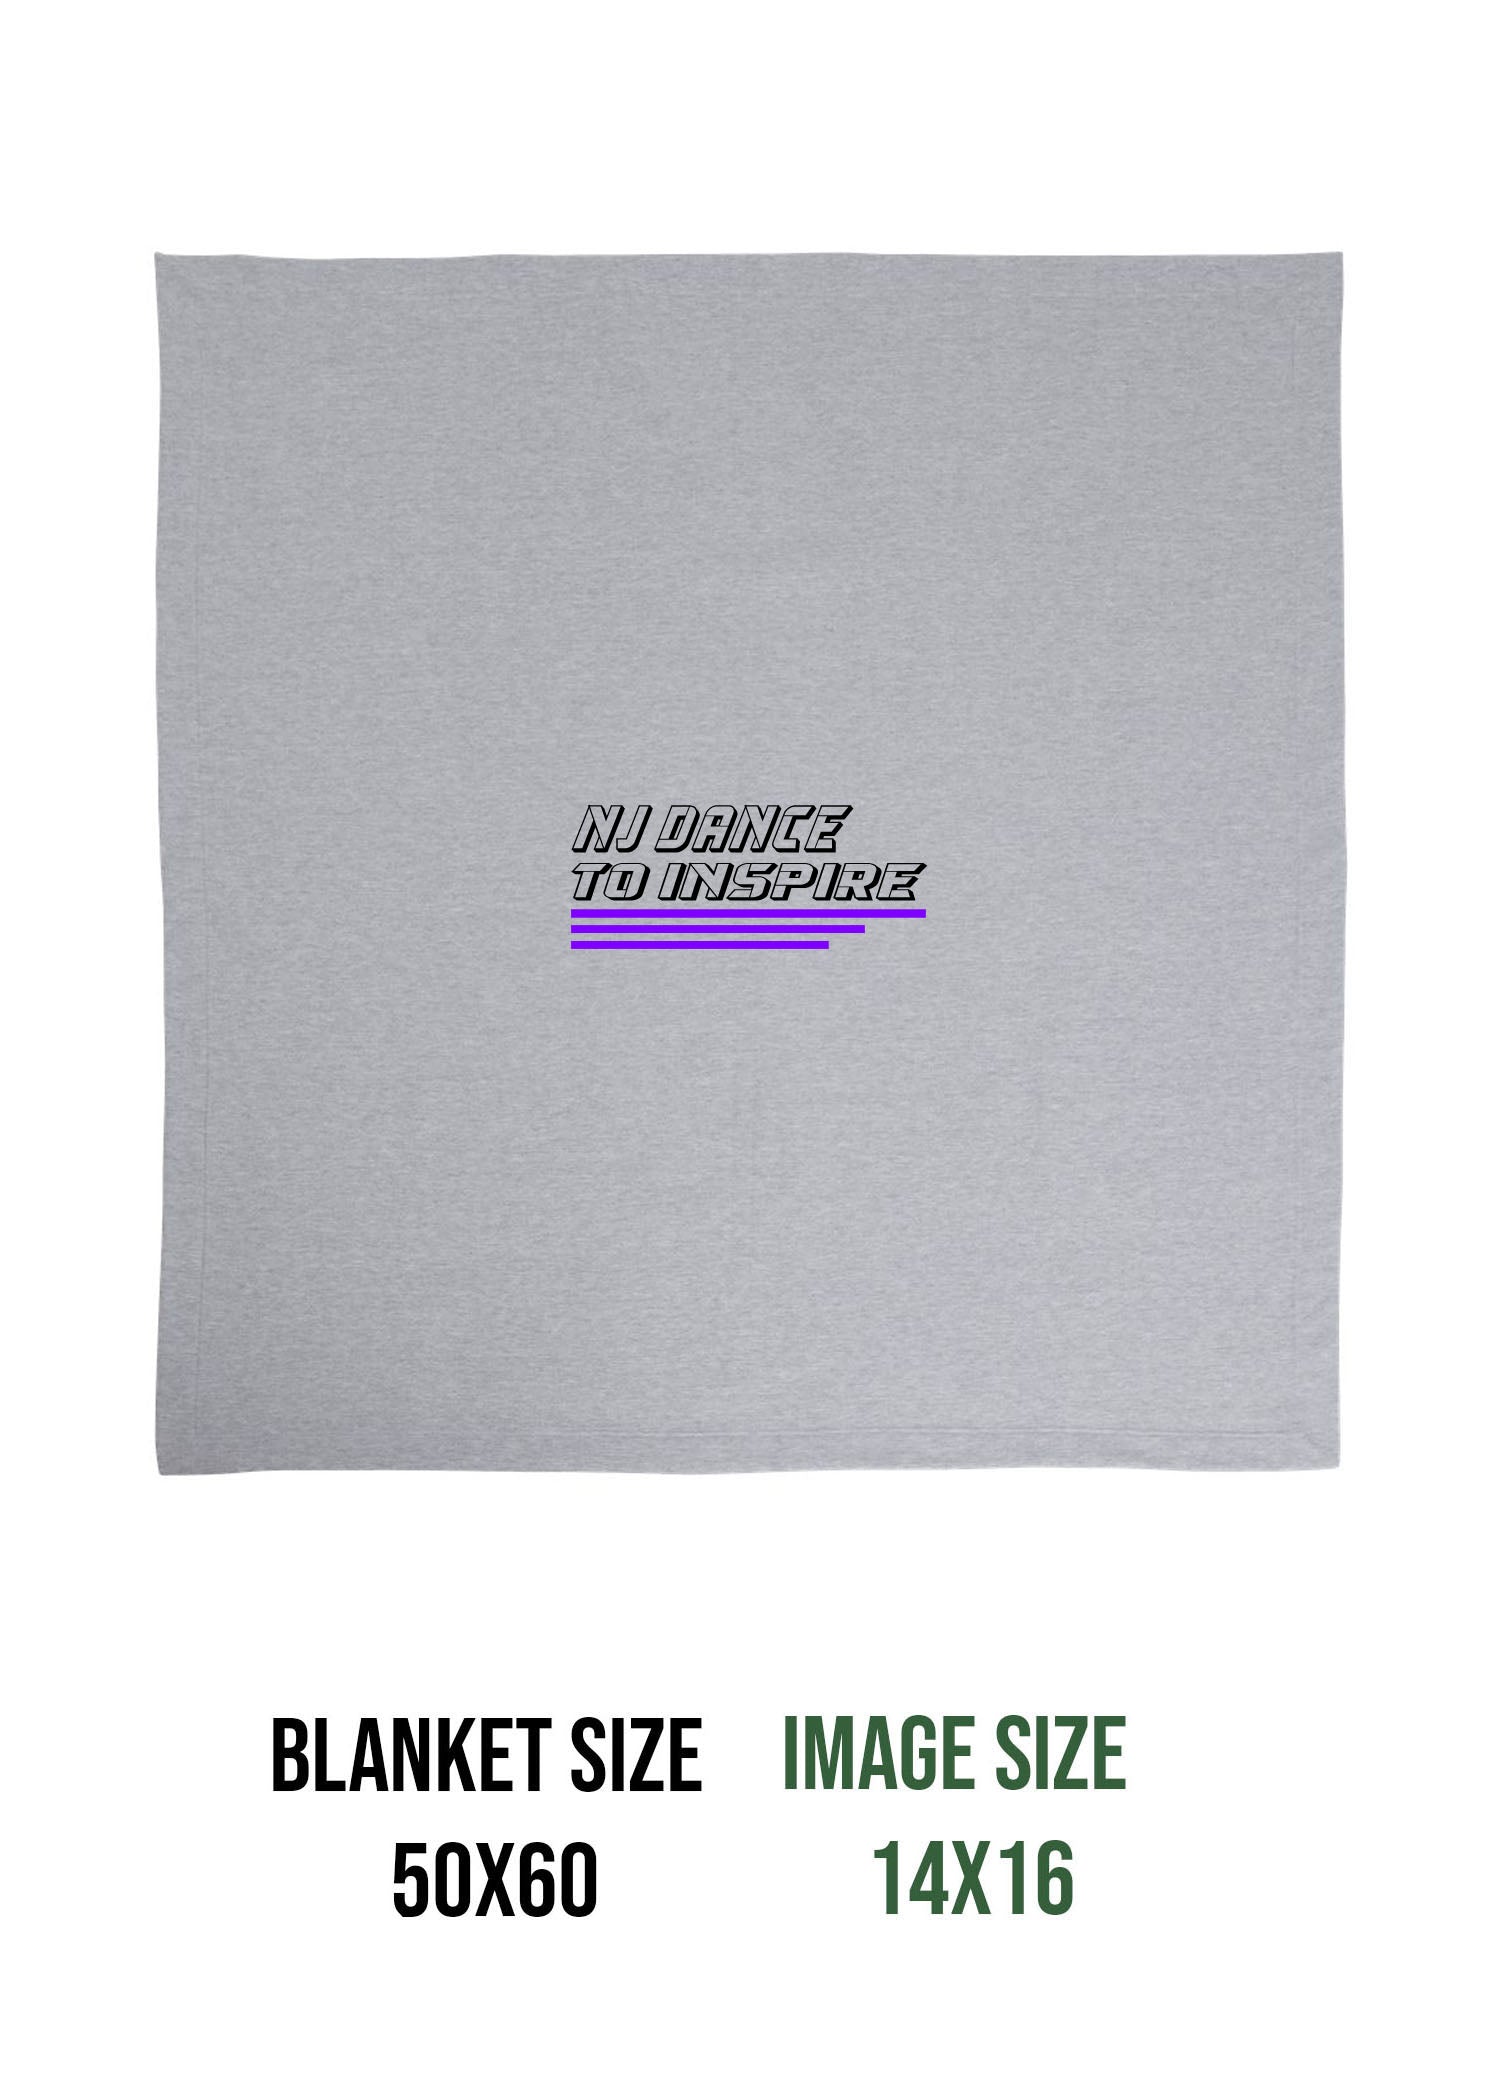 NJ Dance Blanket Design 13